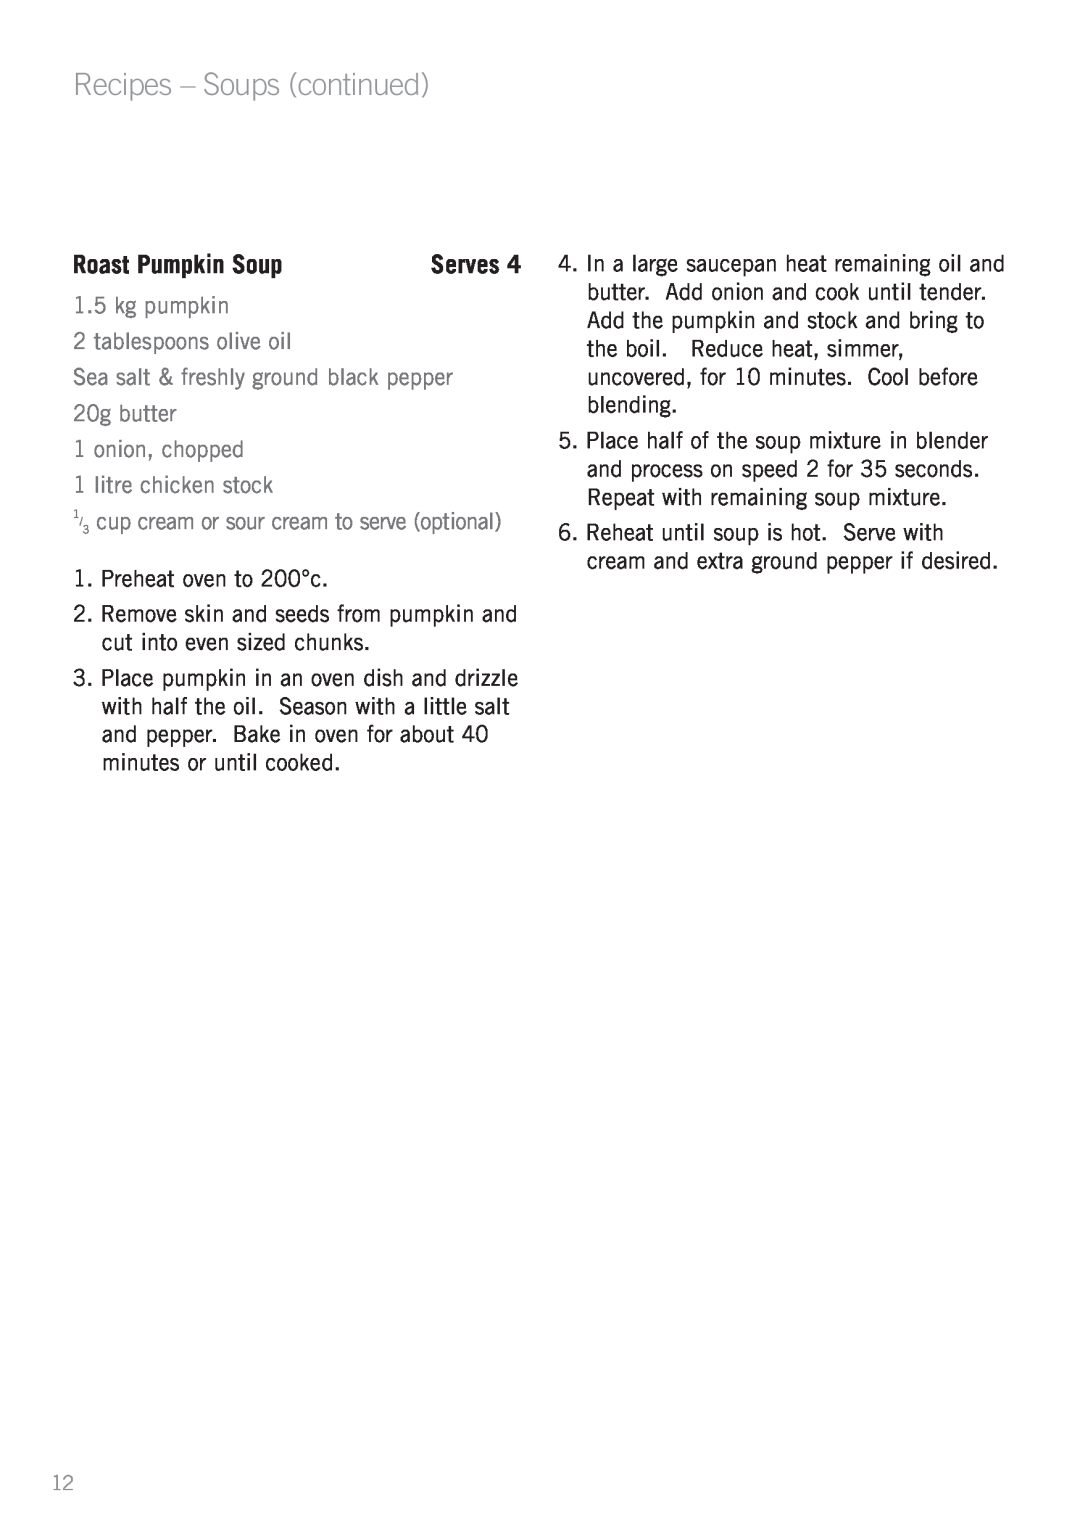 Sunbeam PB7600 manual Recipes - Soups continued, Roast Pumpkin Soup 